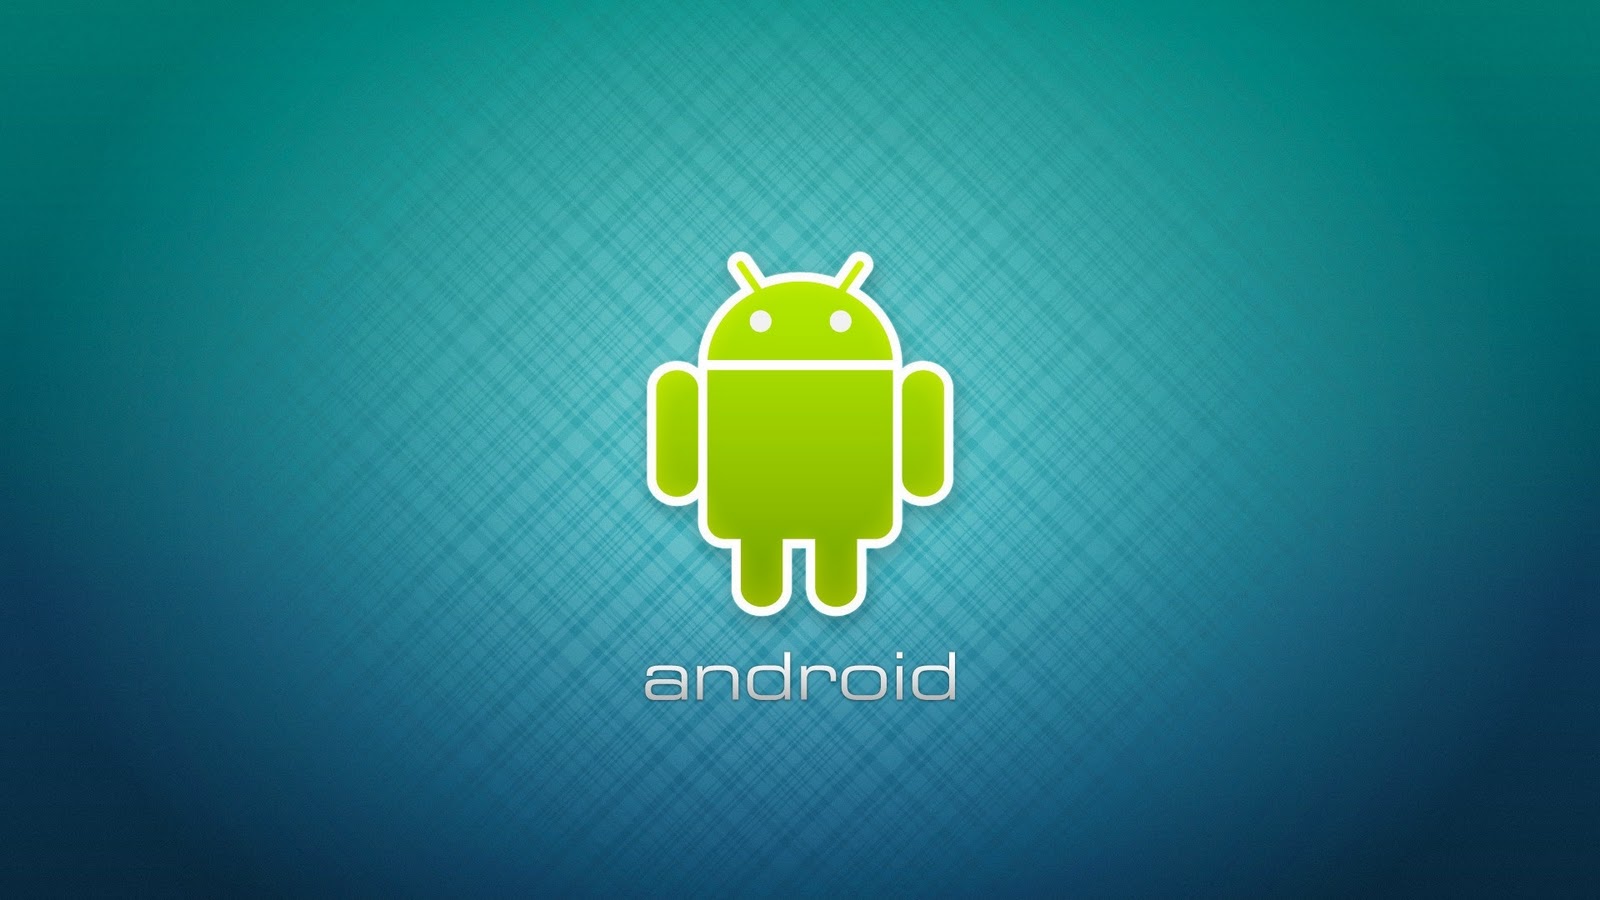 just_android_logo_wallpaper_3769_hd-1920x1080.jpg